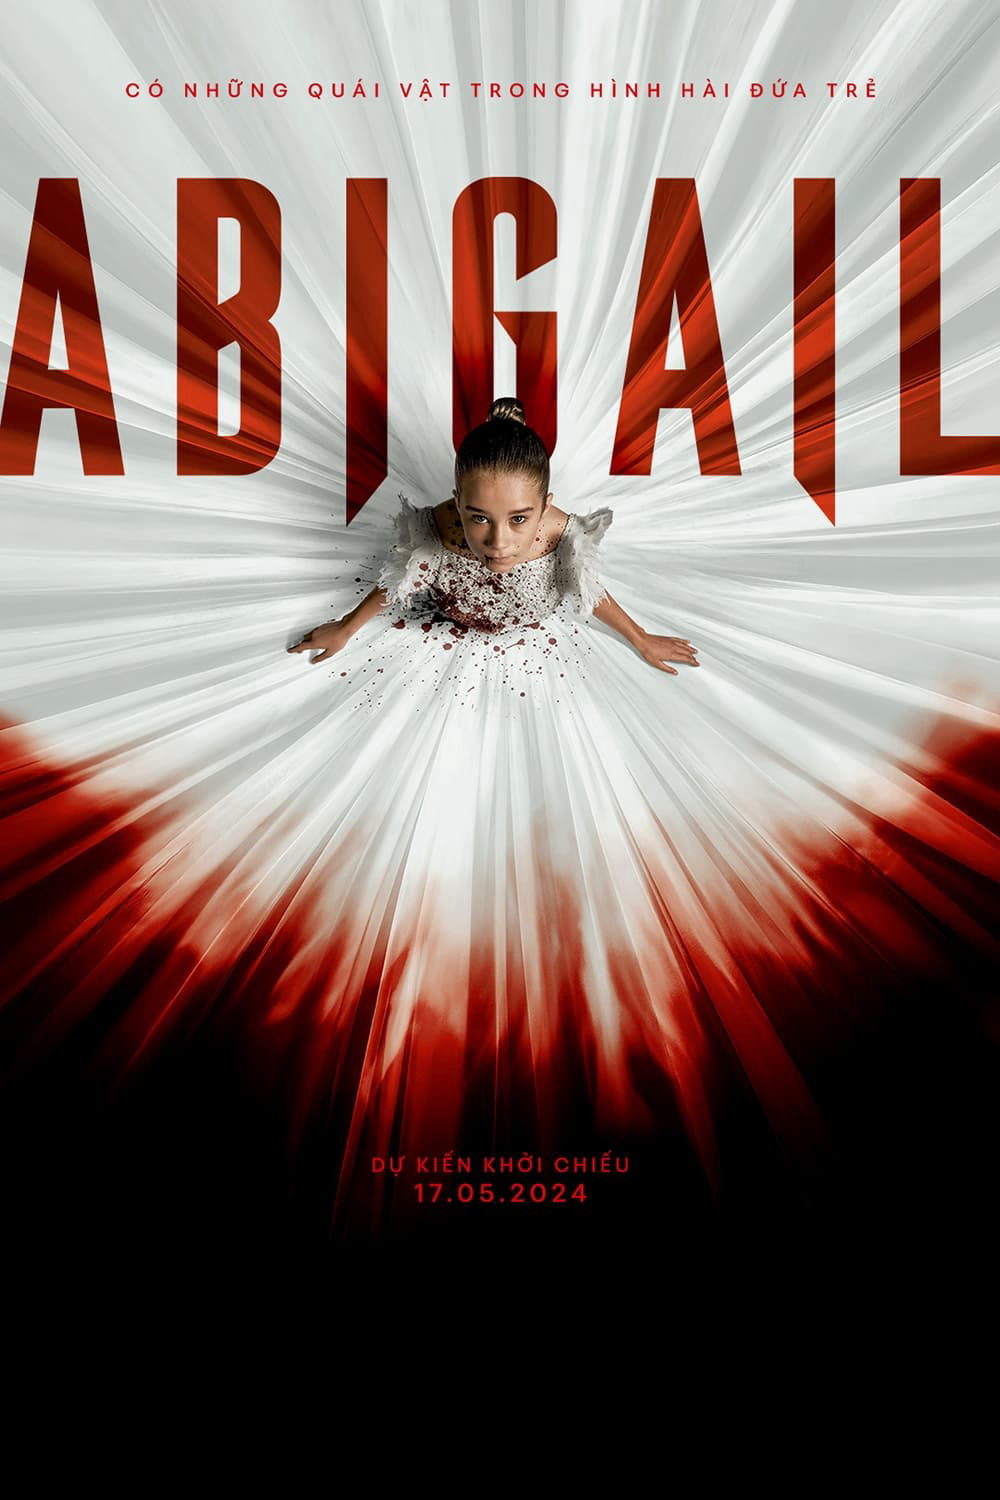 Abigail (Abigail) [2024]